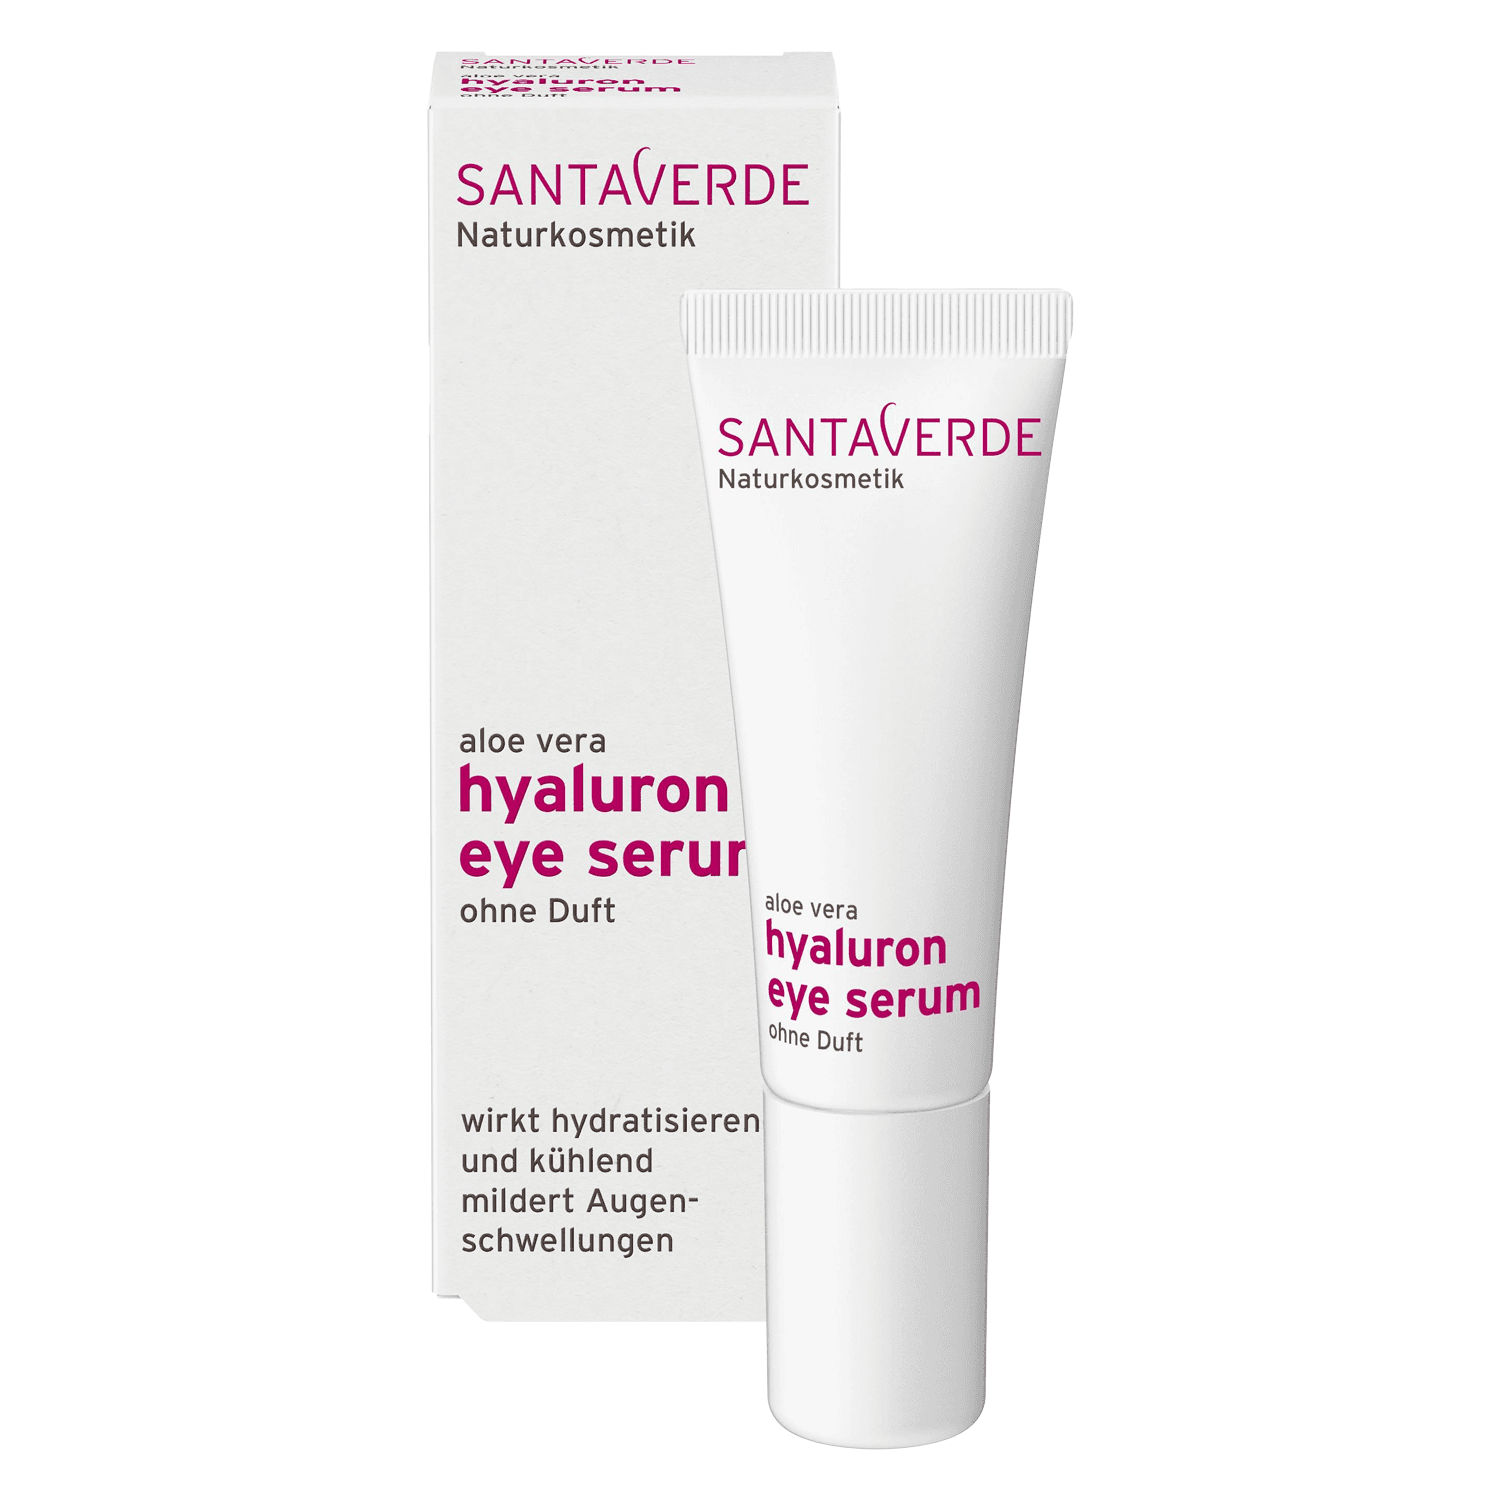 SANTAVERDE - aloe vera hyaluron eye serum without fragrance